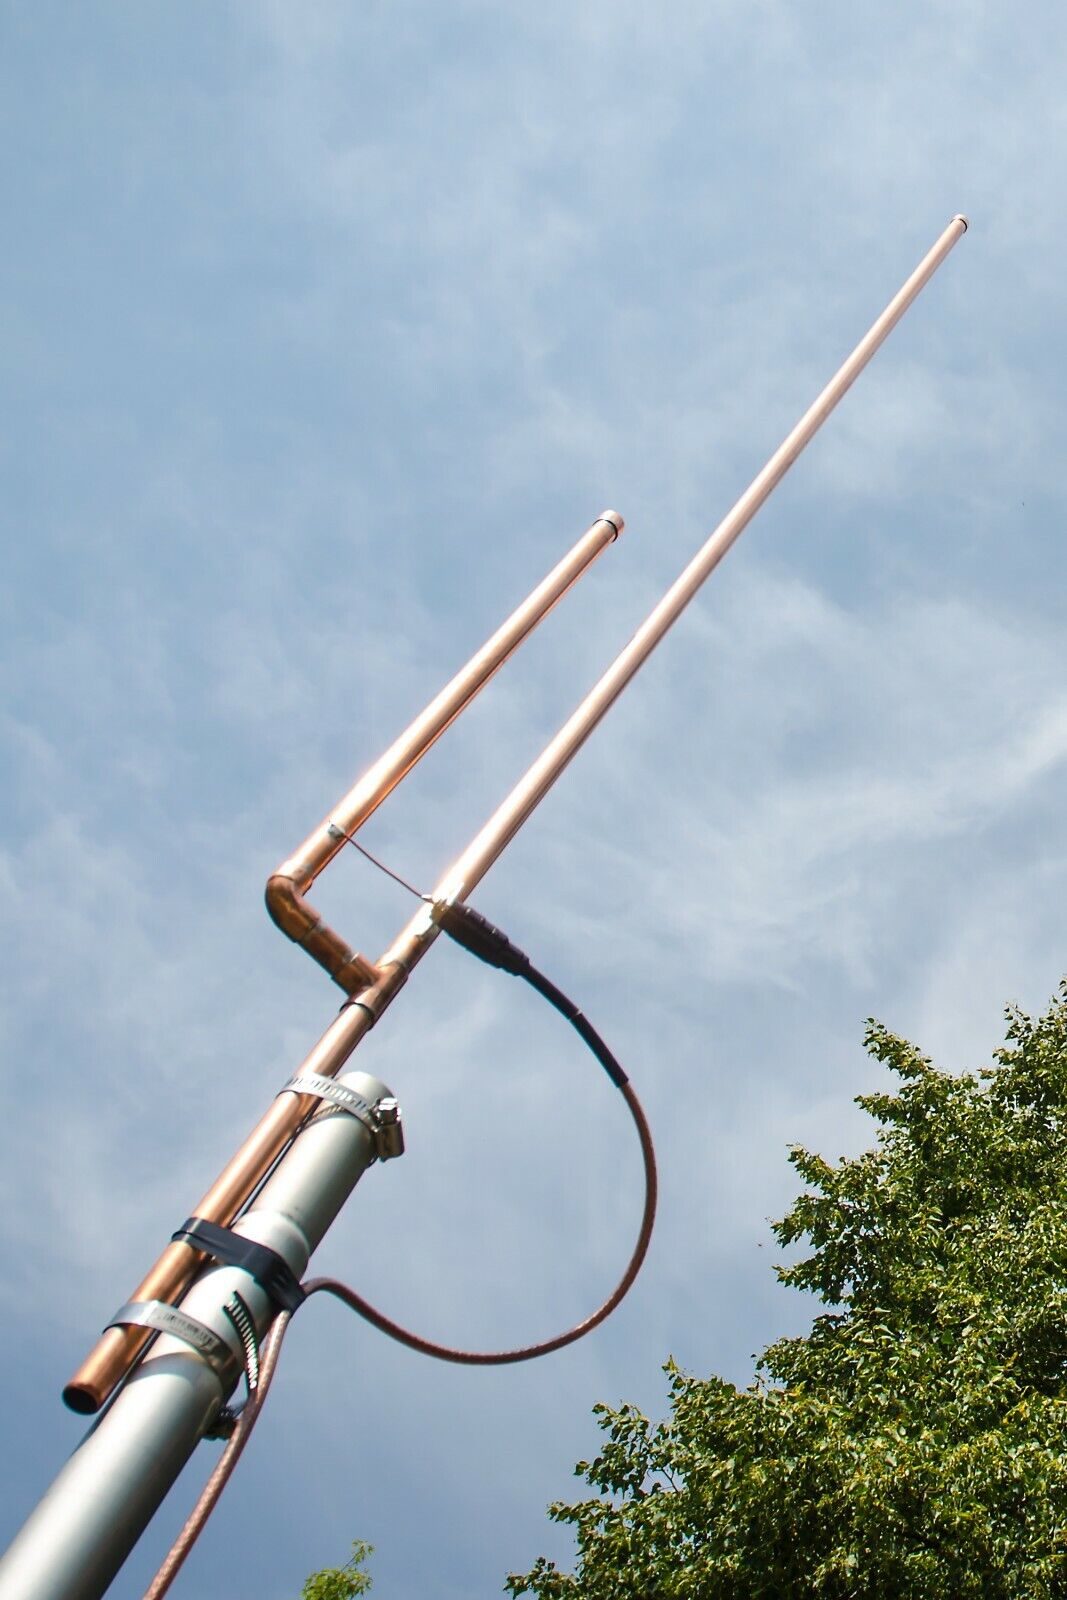 Premium KB9VBR J-Pole Base Antenna 2 meter dual band amateur ham radio scanner